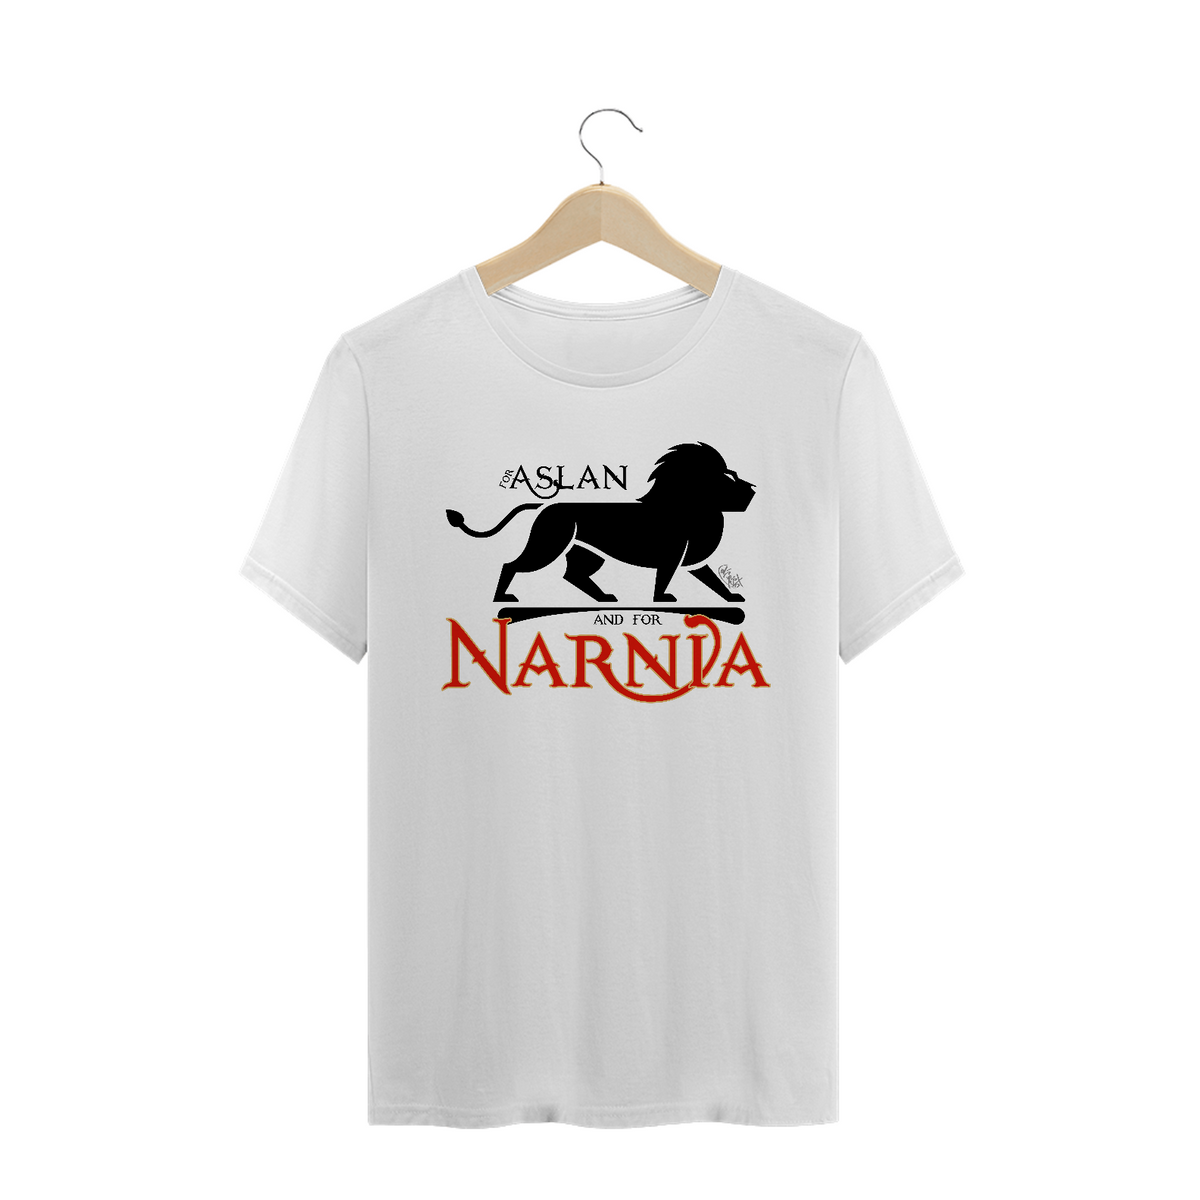 Nome do produto: Camiseta For Aslan [As Crônicas de Nárnia] (cores claras)